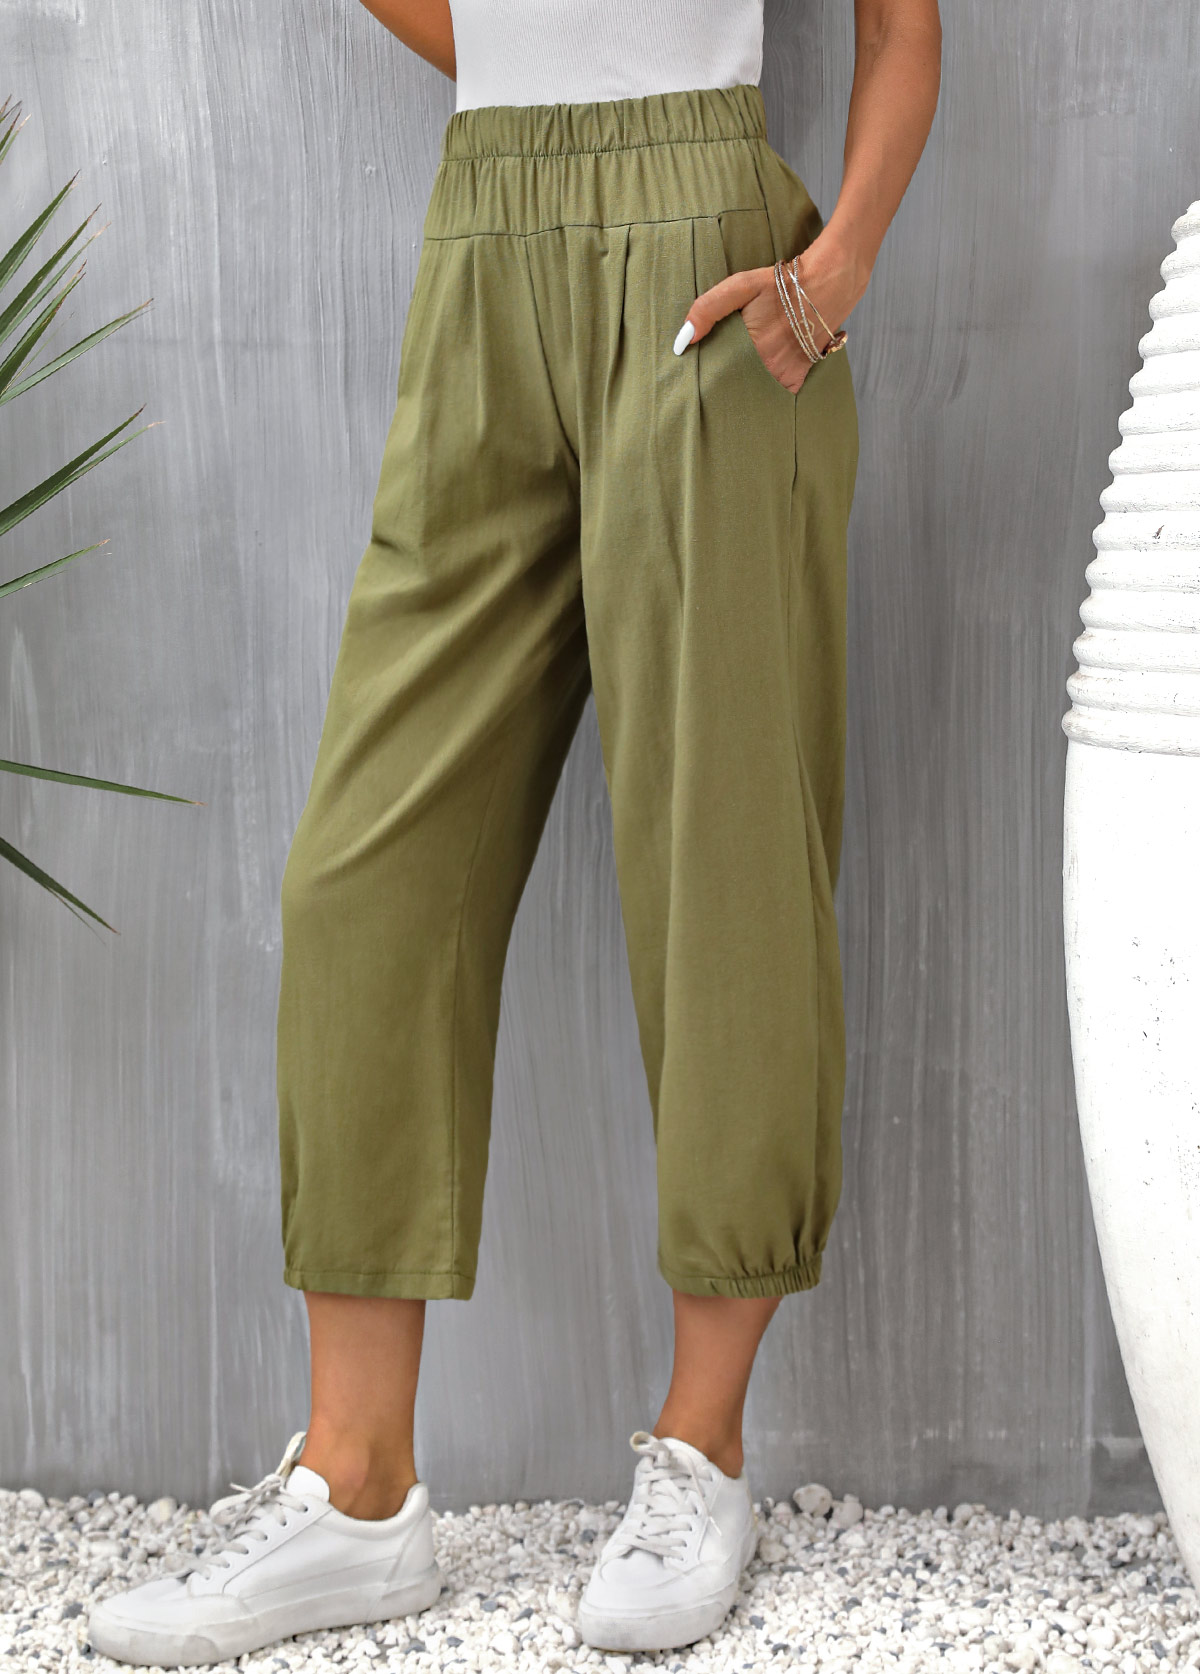 Regular Pocket Olive Green Elastic Waist Pants